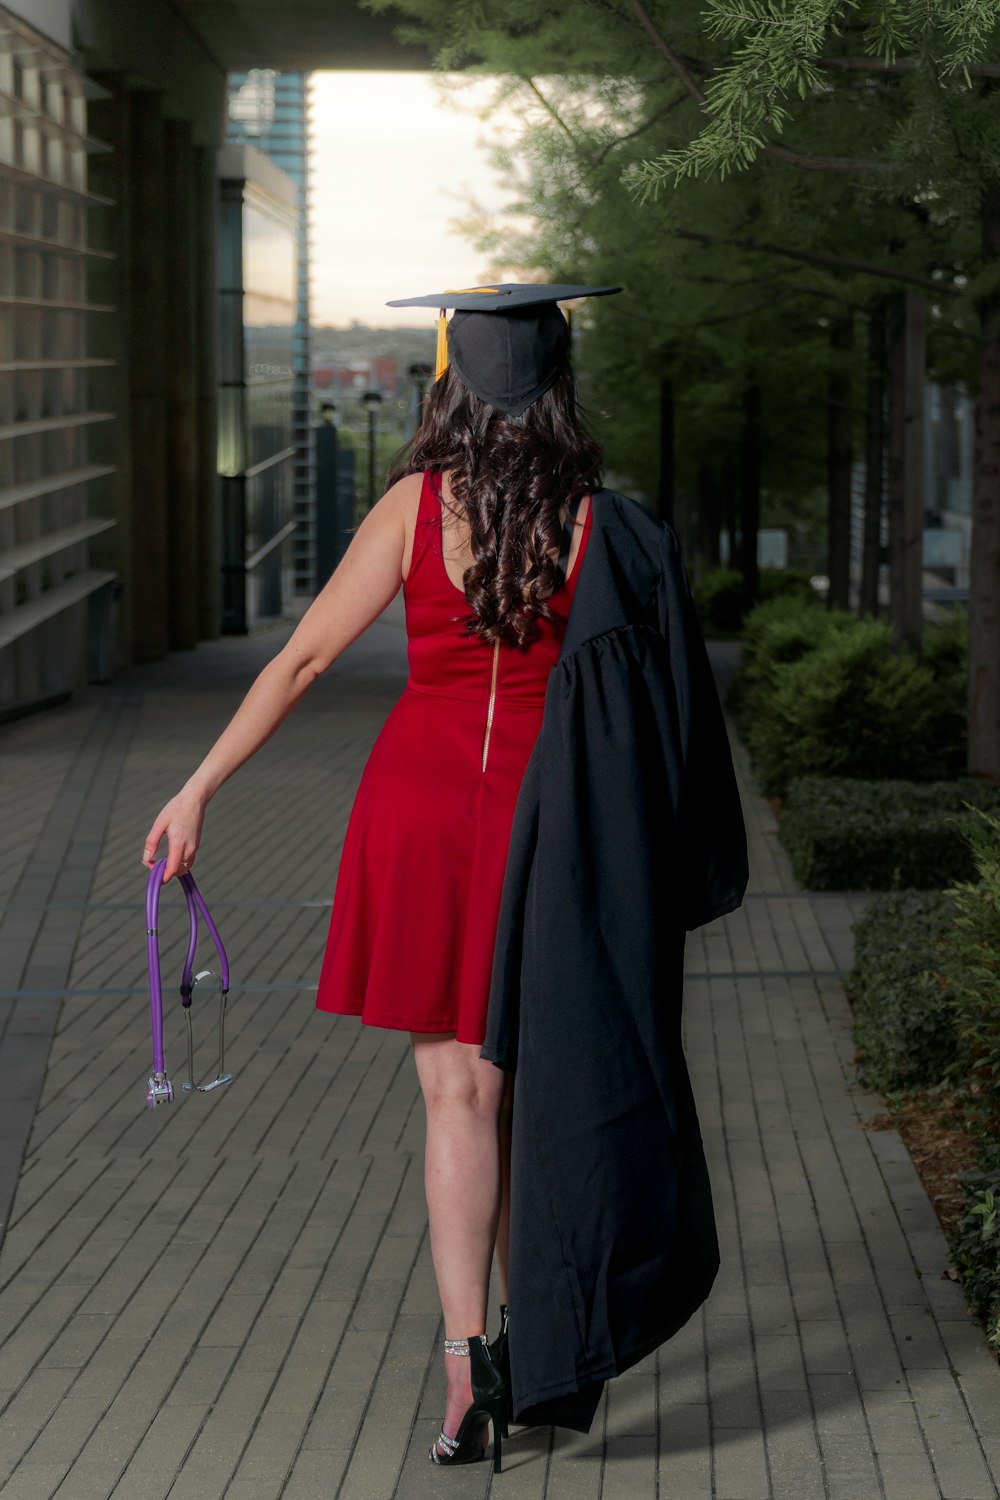 woman in red sleeveless dress wearing black academic hat